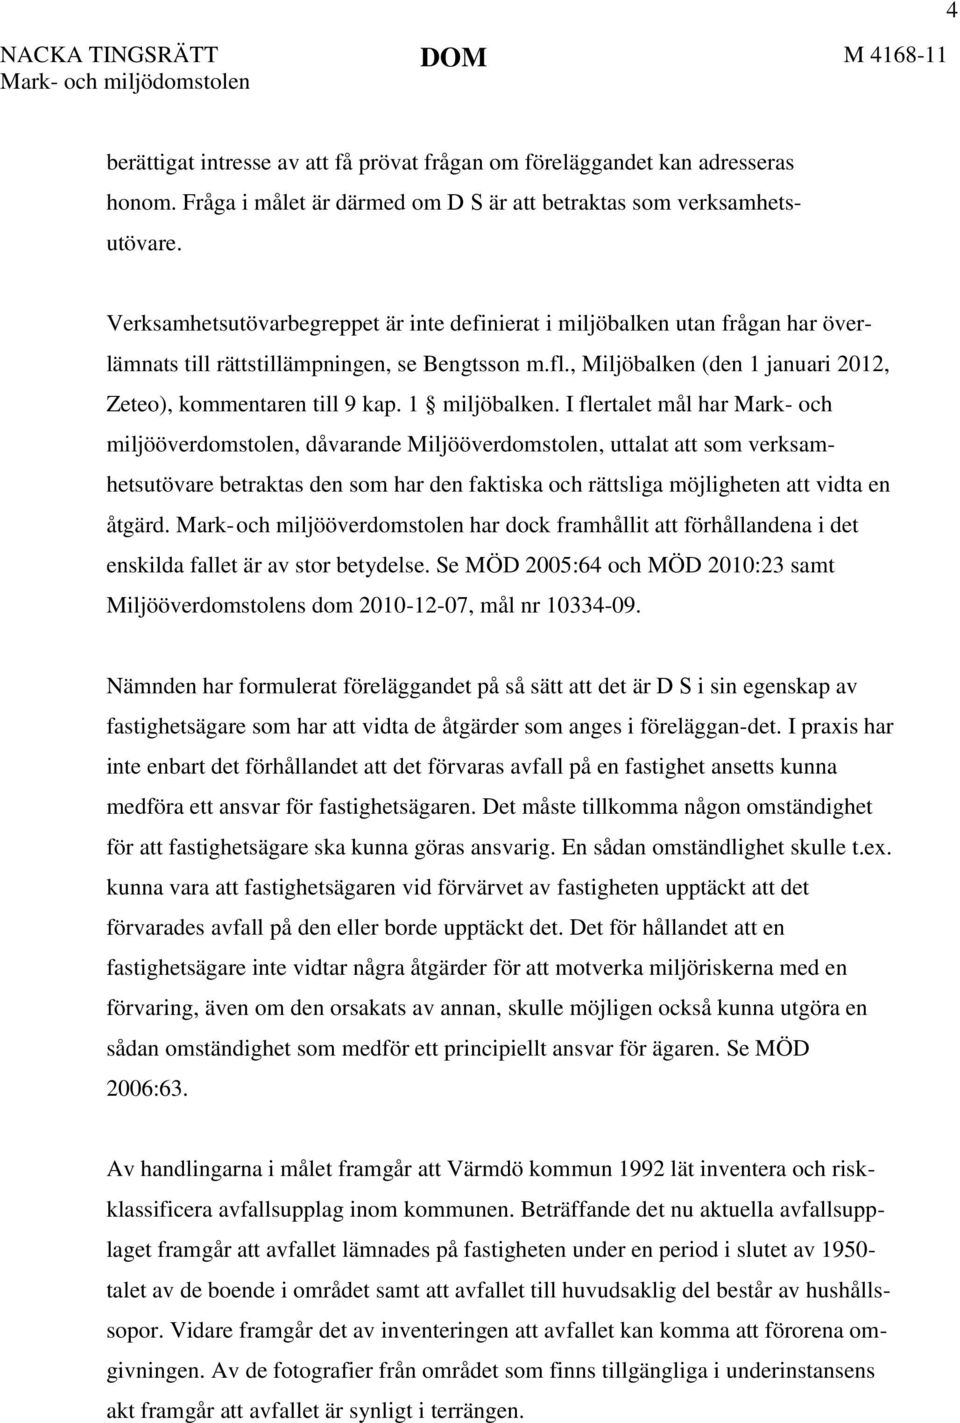 fl., Miljöbalken (den 1 januari 2012, Zeteo), kommentaren till 9 kap. 1 miljöbalken.